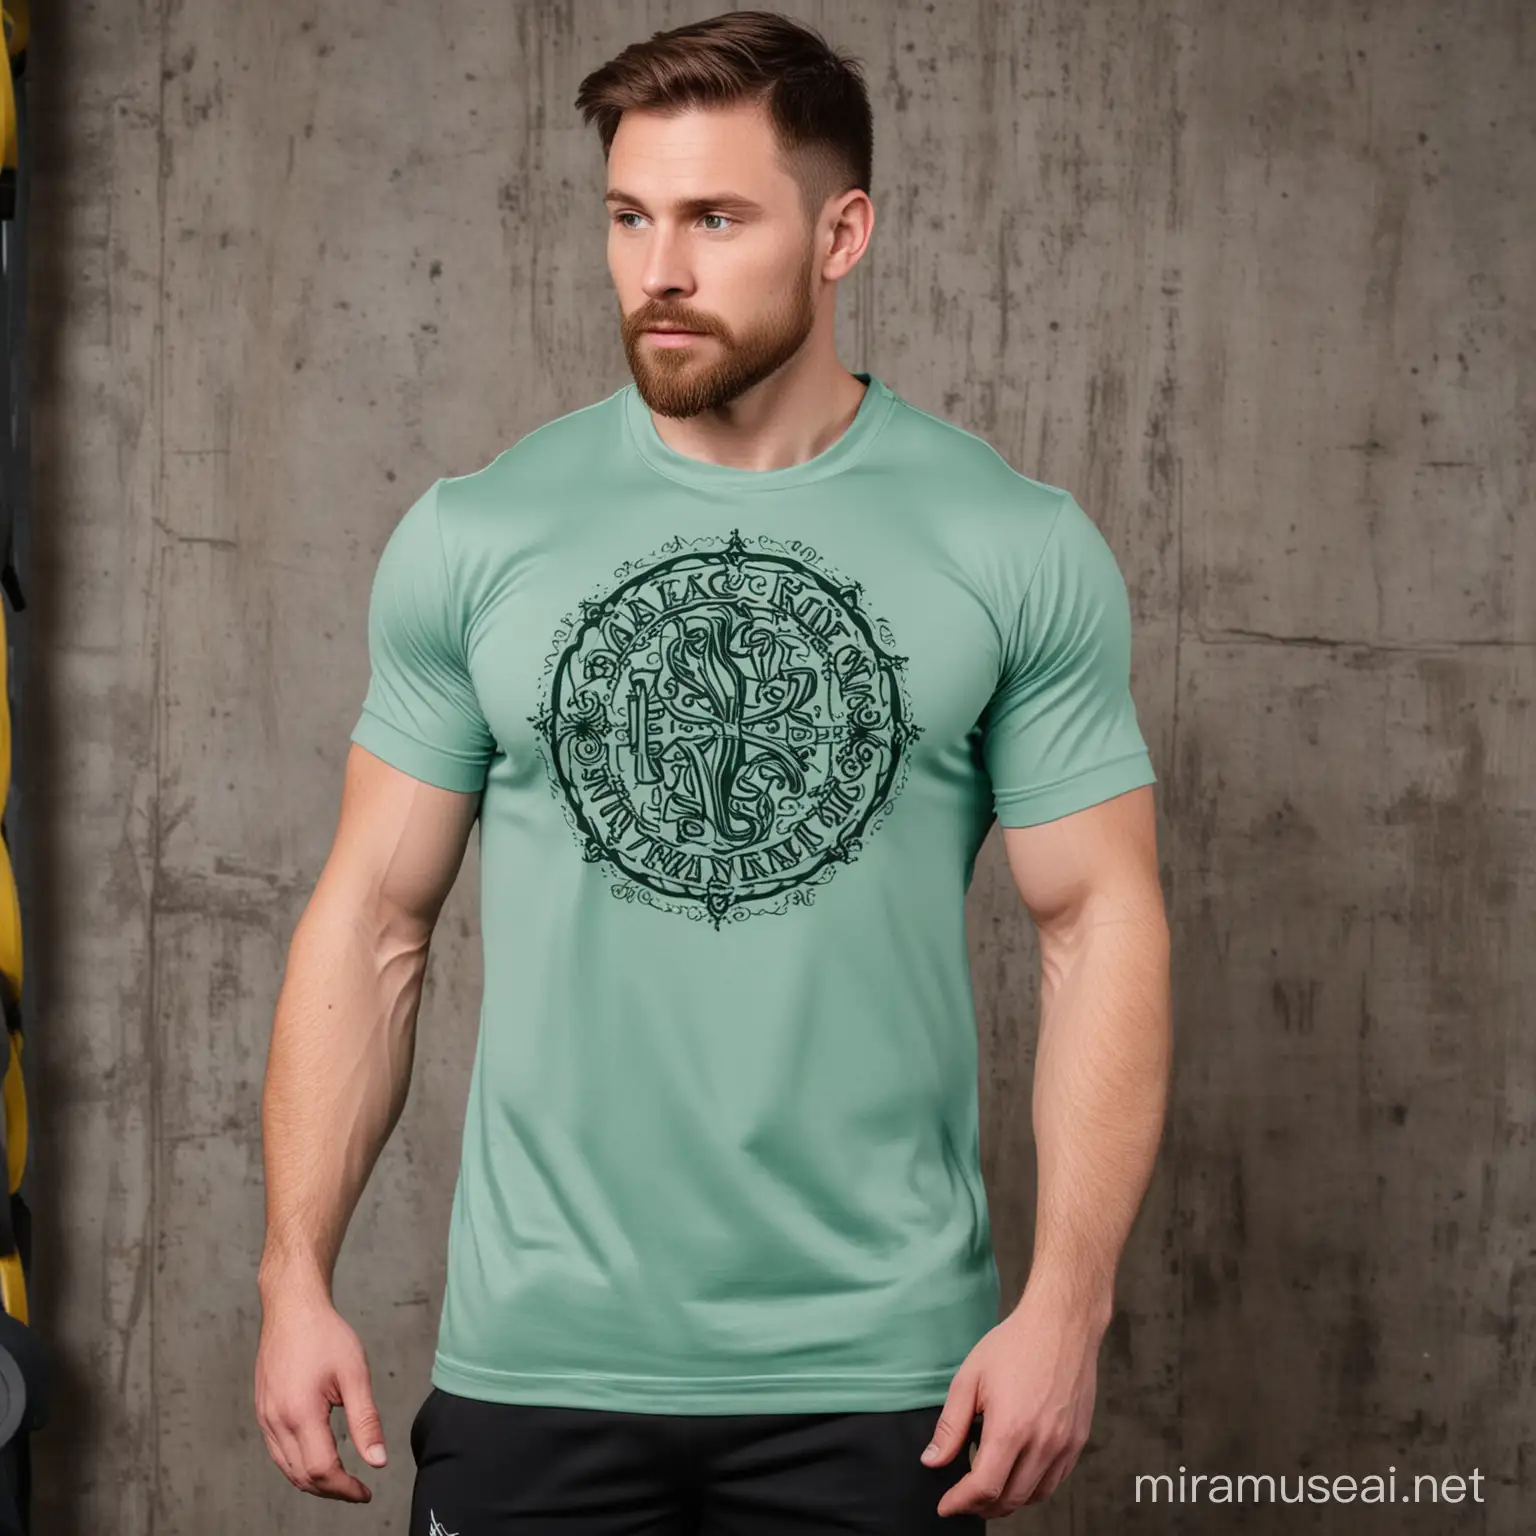 gaelic inspired gym shirts